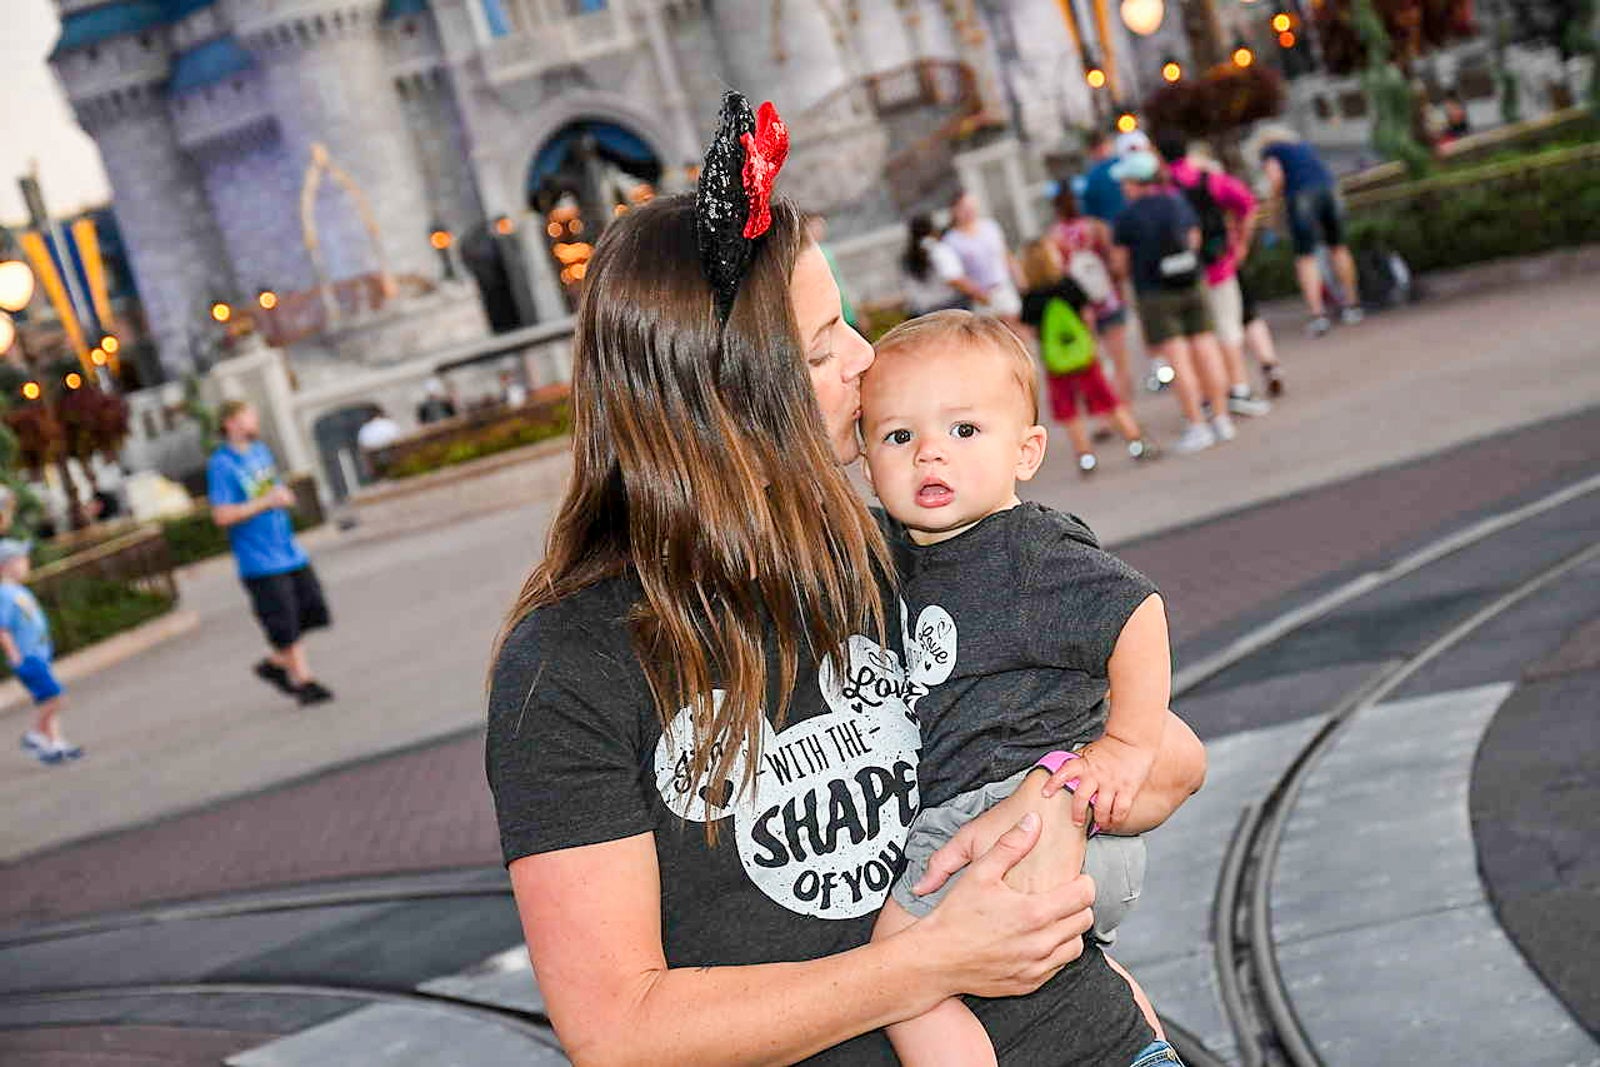 Tarah kissing her child on the cheek at Disney World